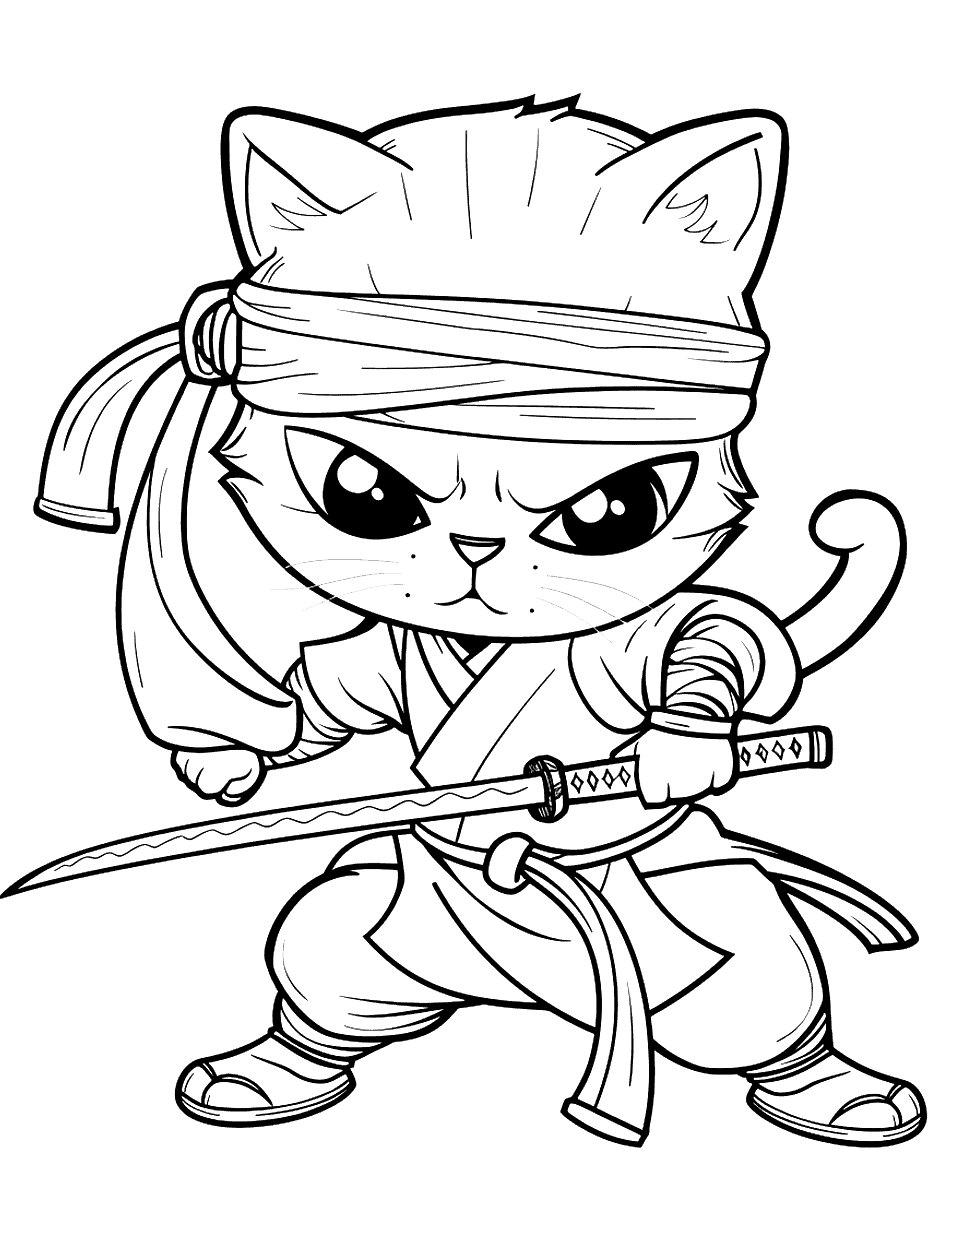 Cute Ninja Kitten Coloring Page - A kitten dressed as a ninja with a tiny katana.